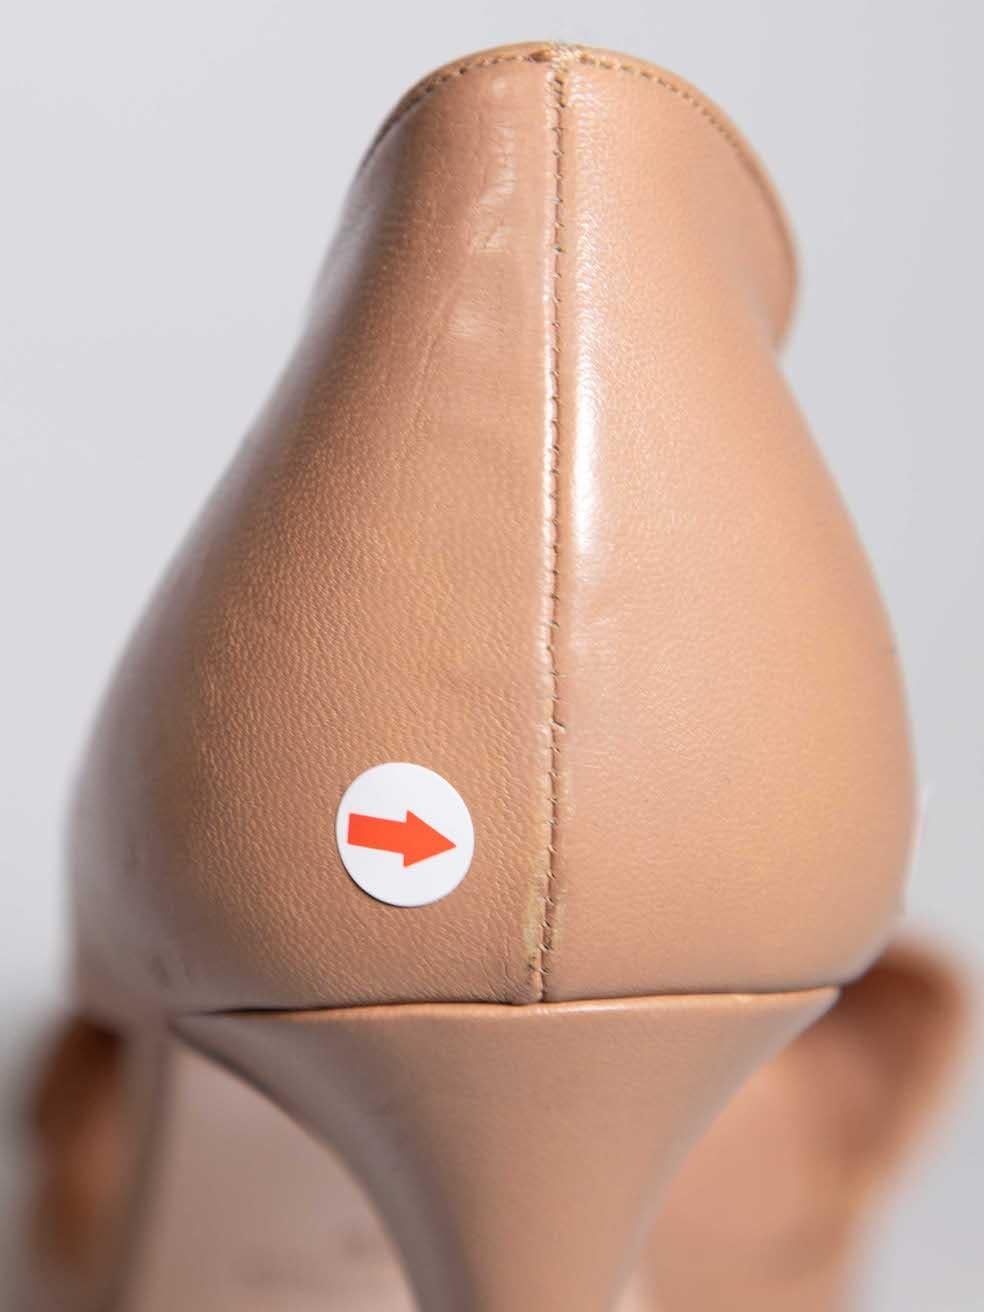 Fabrizio Bulckaen Nude Leather Cut Out Heels Size IT 39 For Sale 3